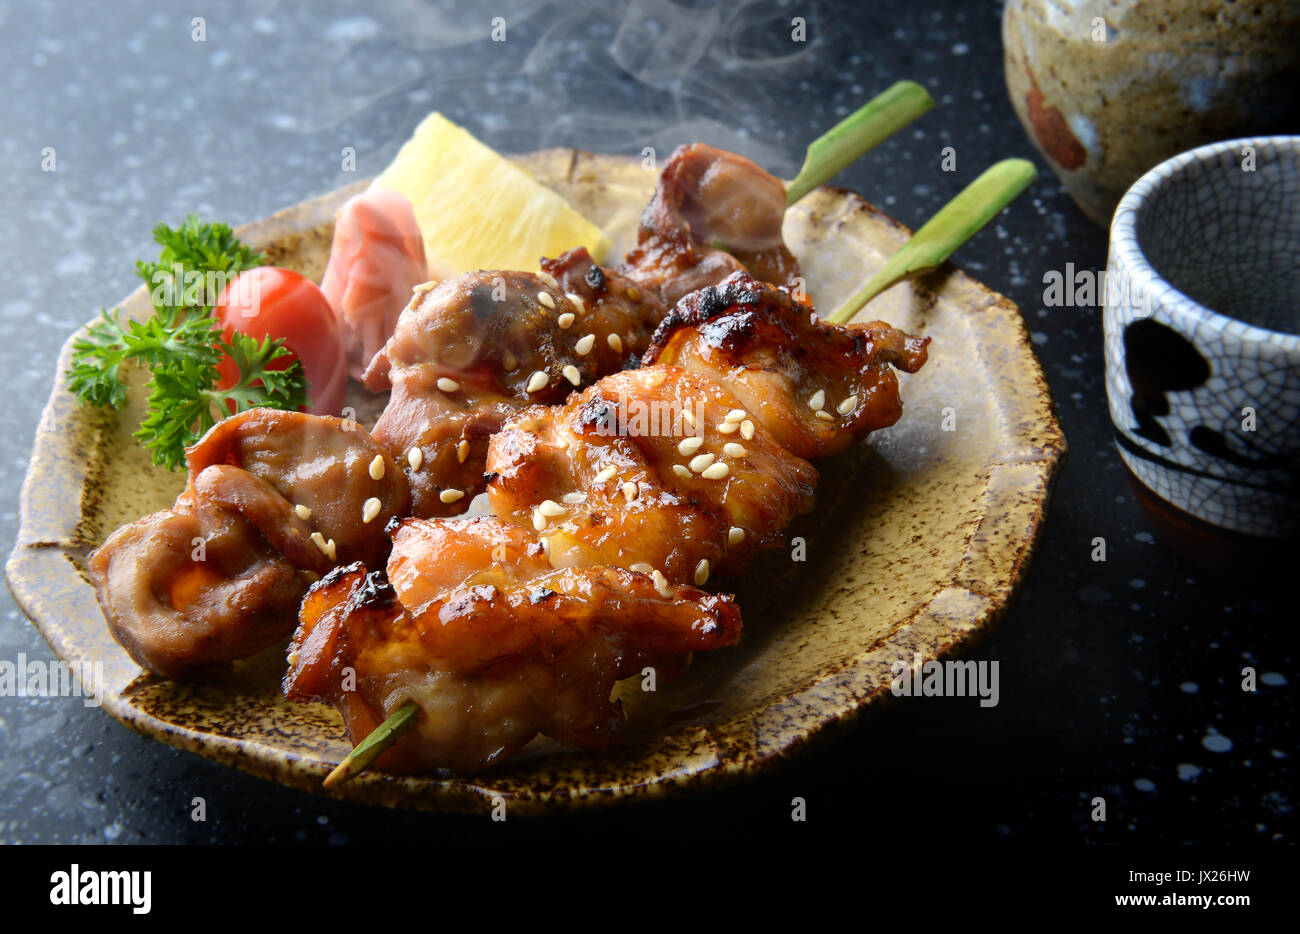 Japanese chicken grill or yakitori serve in izakaya style restourant set on Japanese style dish with flash lighting. Stock Photo